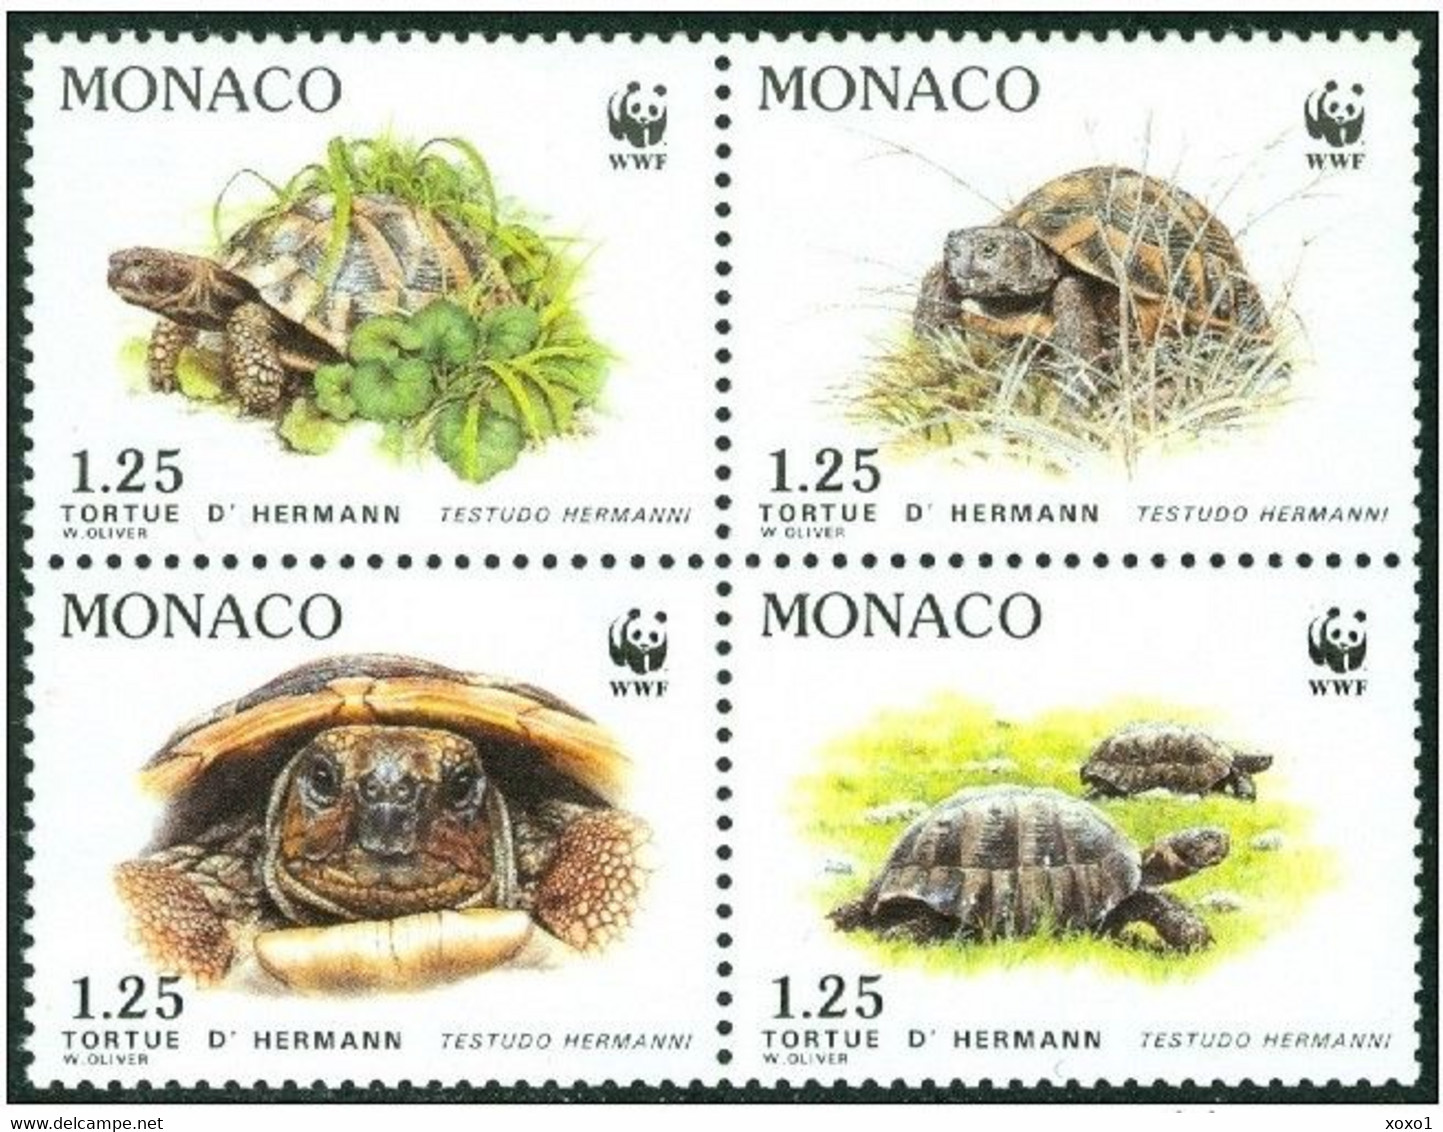 Monaco 1991 MiNr. 2046 - 2049 Reptiles Turtles Hermann's Tortoise WWF   4v  MNH** 5,00 € - Unused Stamps